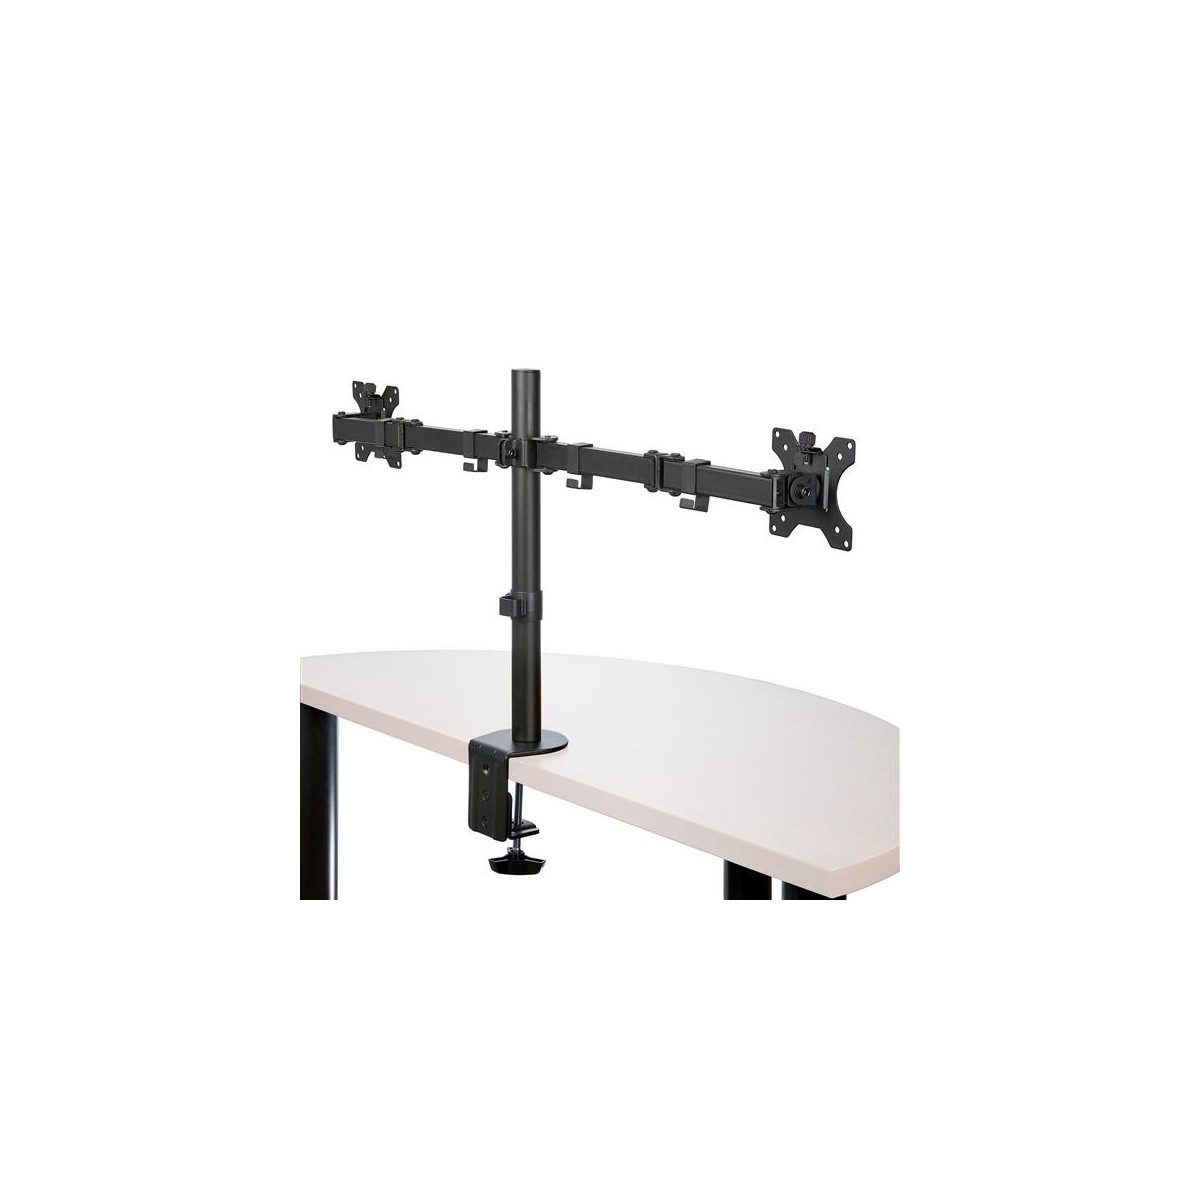 StarTech.com Desk Mount Dual Monitor Arm - Desk Clamp / Grommet VESA Monitor Mount for up to 32" Displays - Ergonomic Articulati